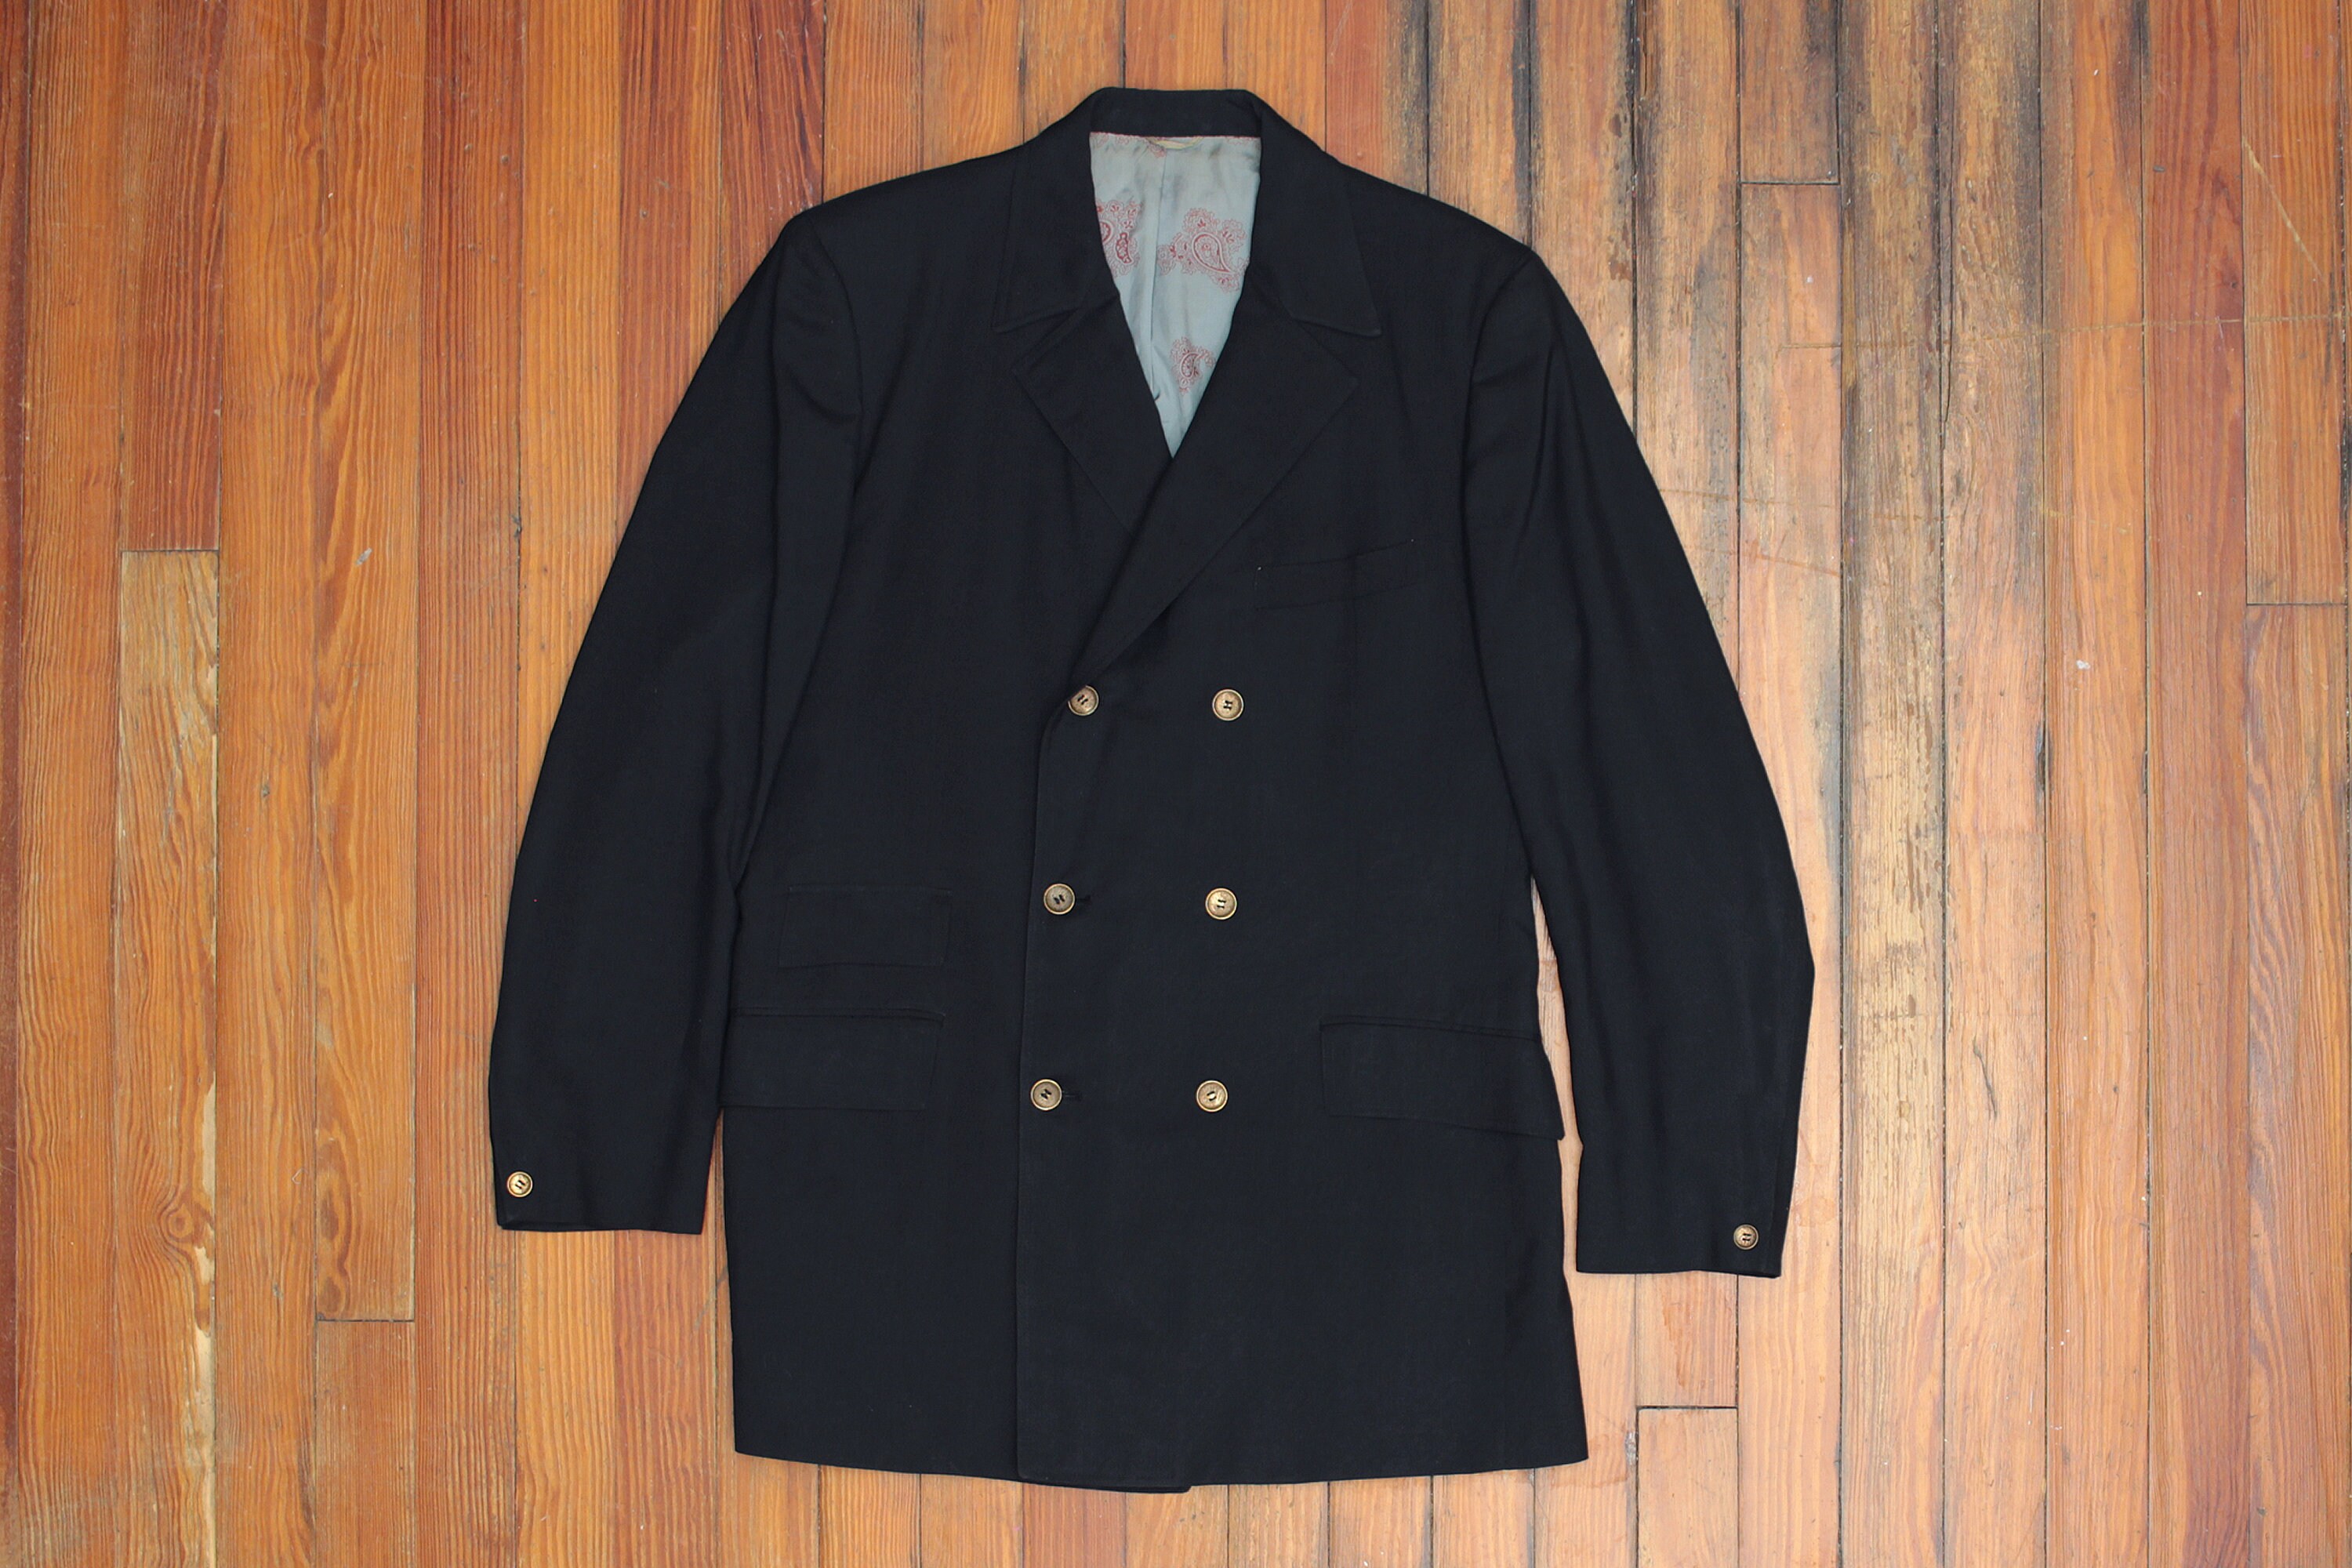 NWOT Louis Vuitton Uniforms Grey Peak Lapel Sport Coat Blazer Jacket Size  46/36